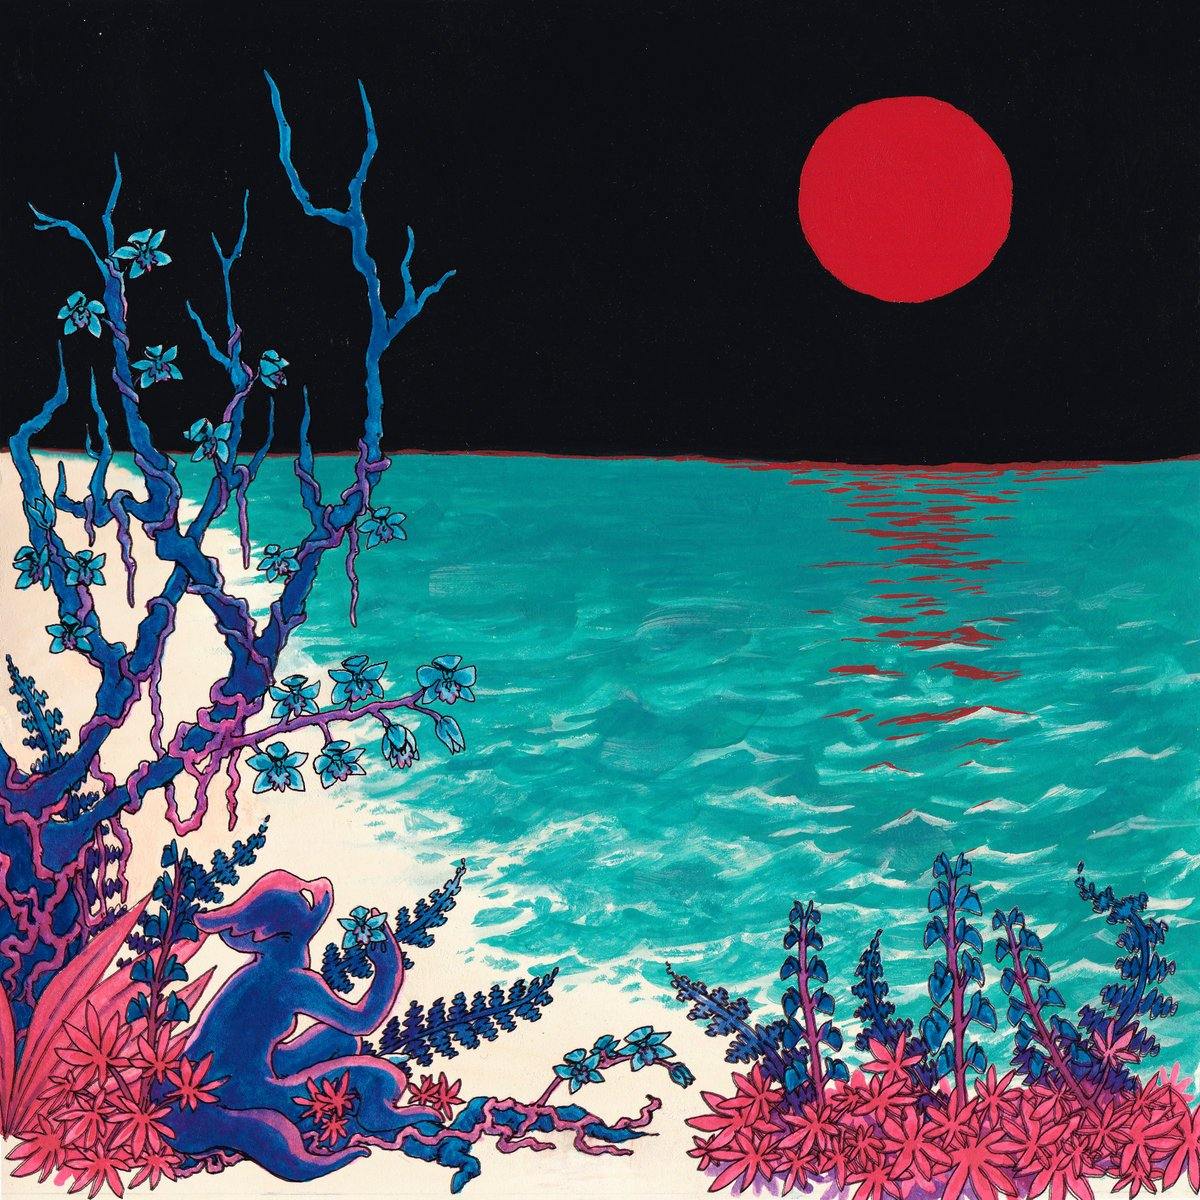 Buy – Glass Beach "The First Glass Beach Album" 2x12" – Band & Music Merch – Cold Cuts Merch